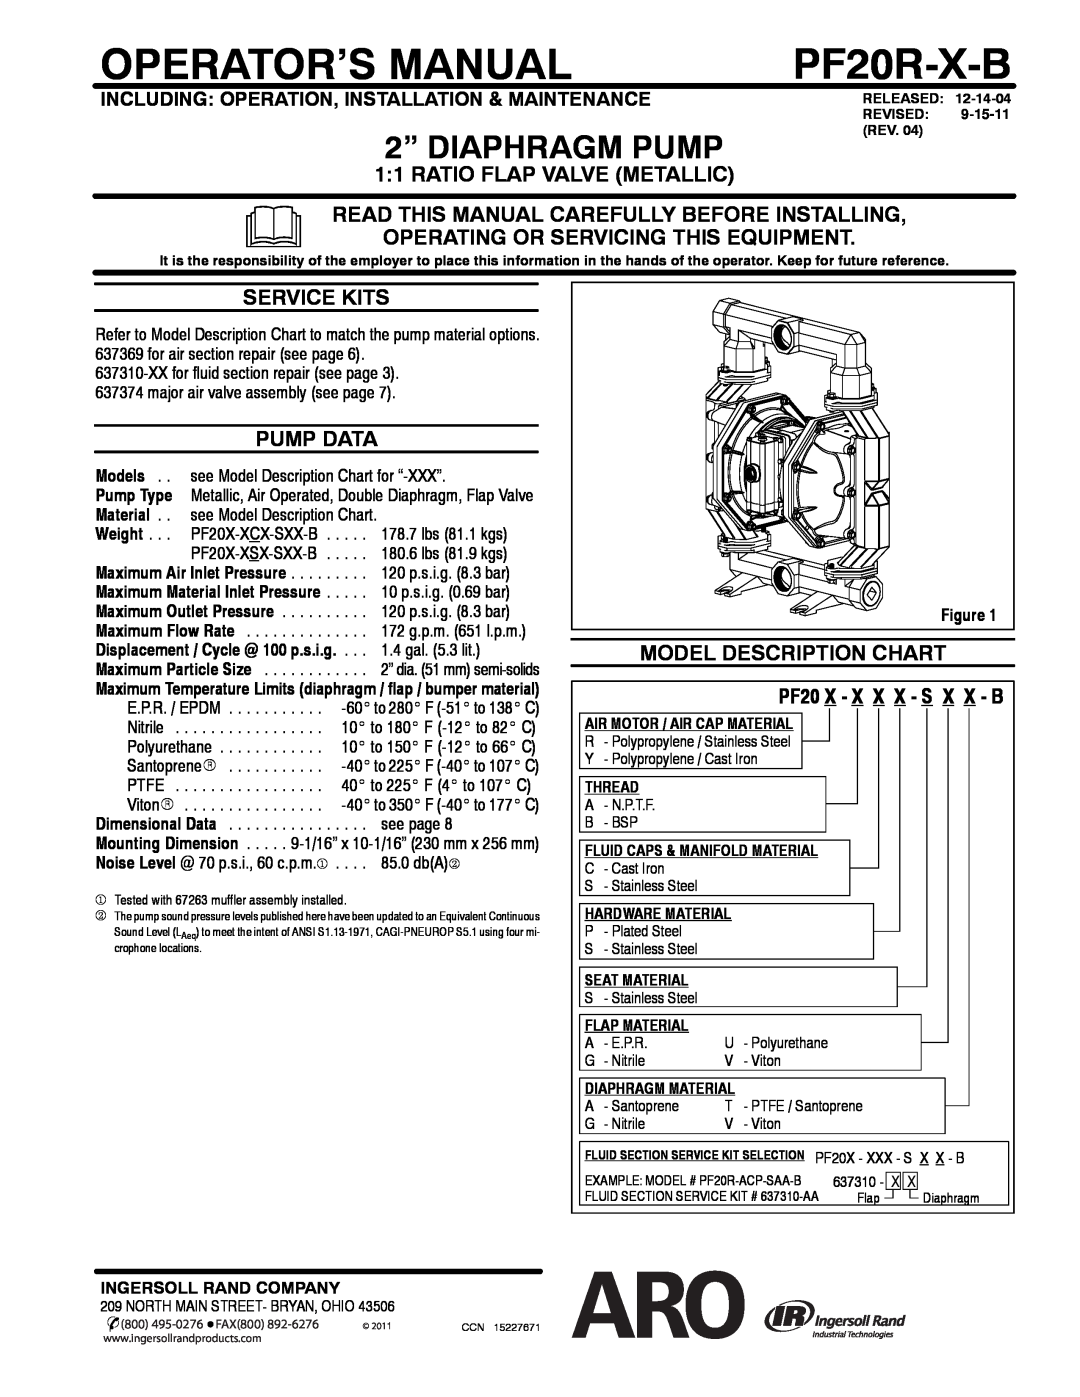 Ingersoll-Rand PF20R-X-B manual Ratio Flap Valve Metallic, Read This Manual Carefully Before Installing, Service Kits 